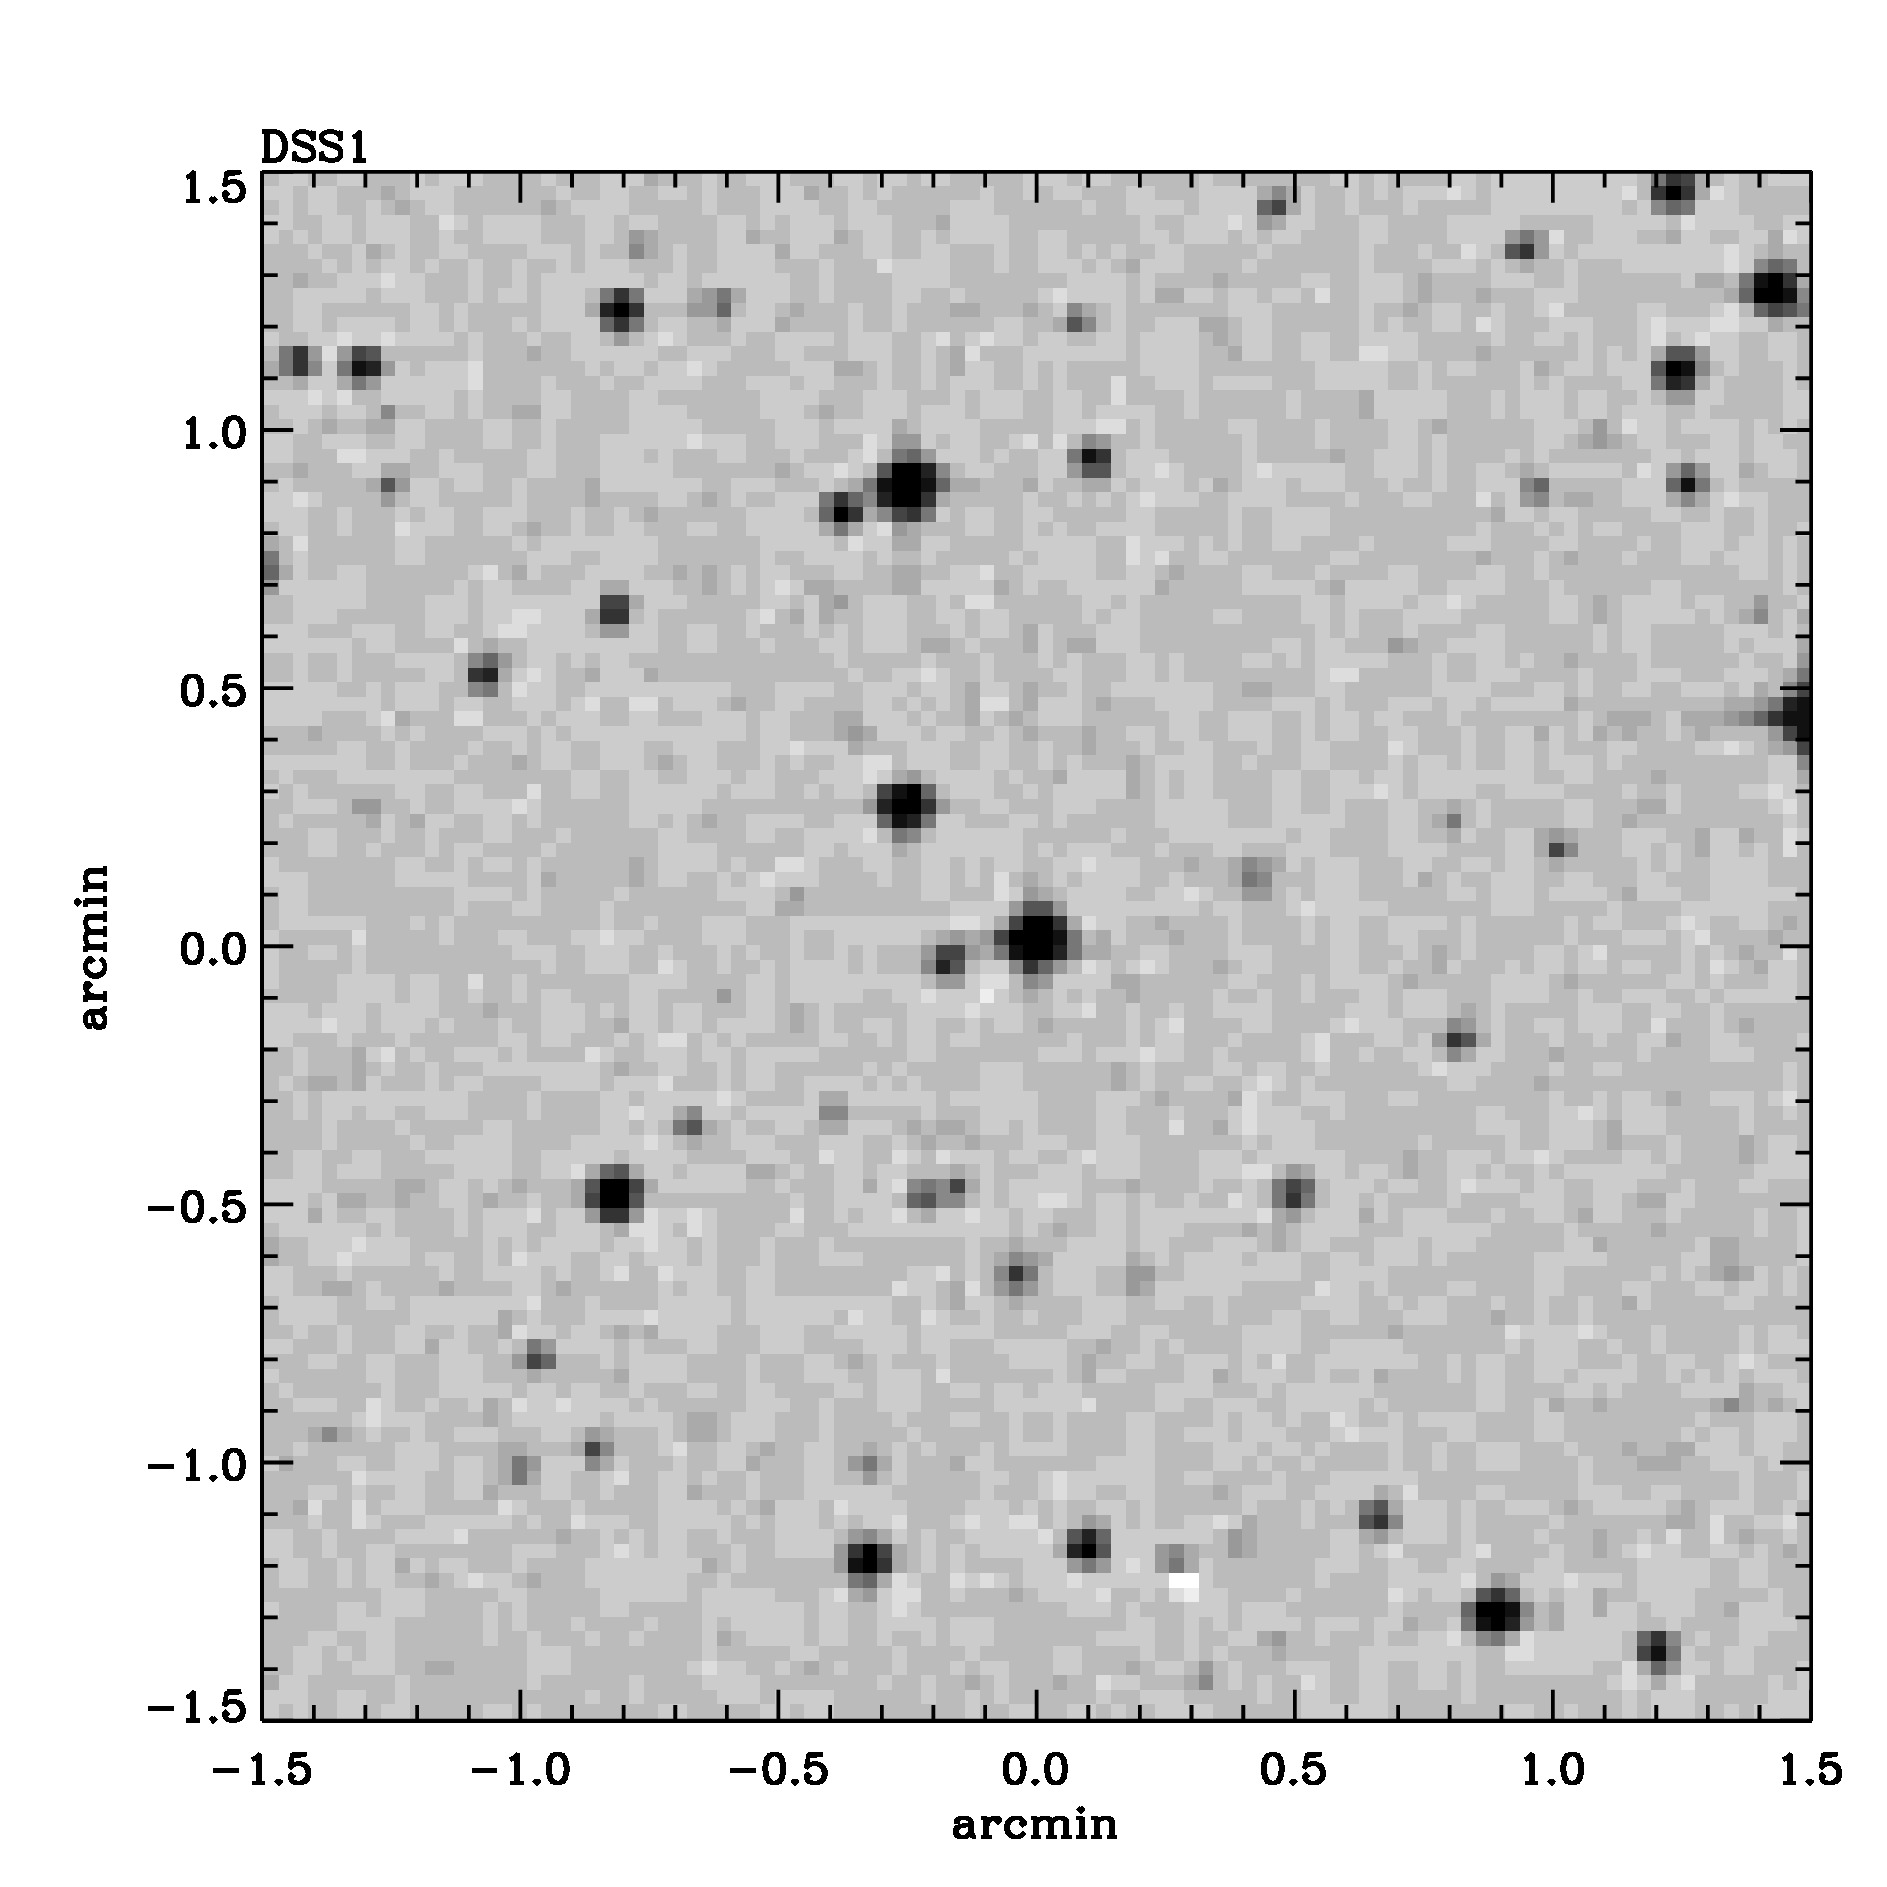 Optical image for SWIFT J0826.2-7033